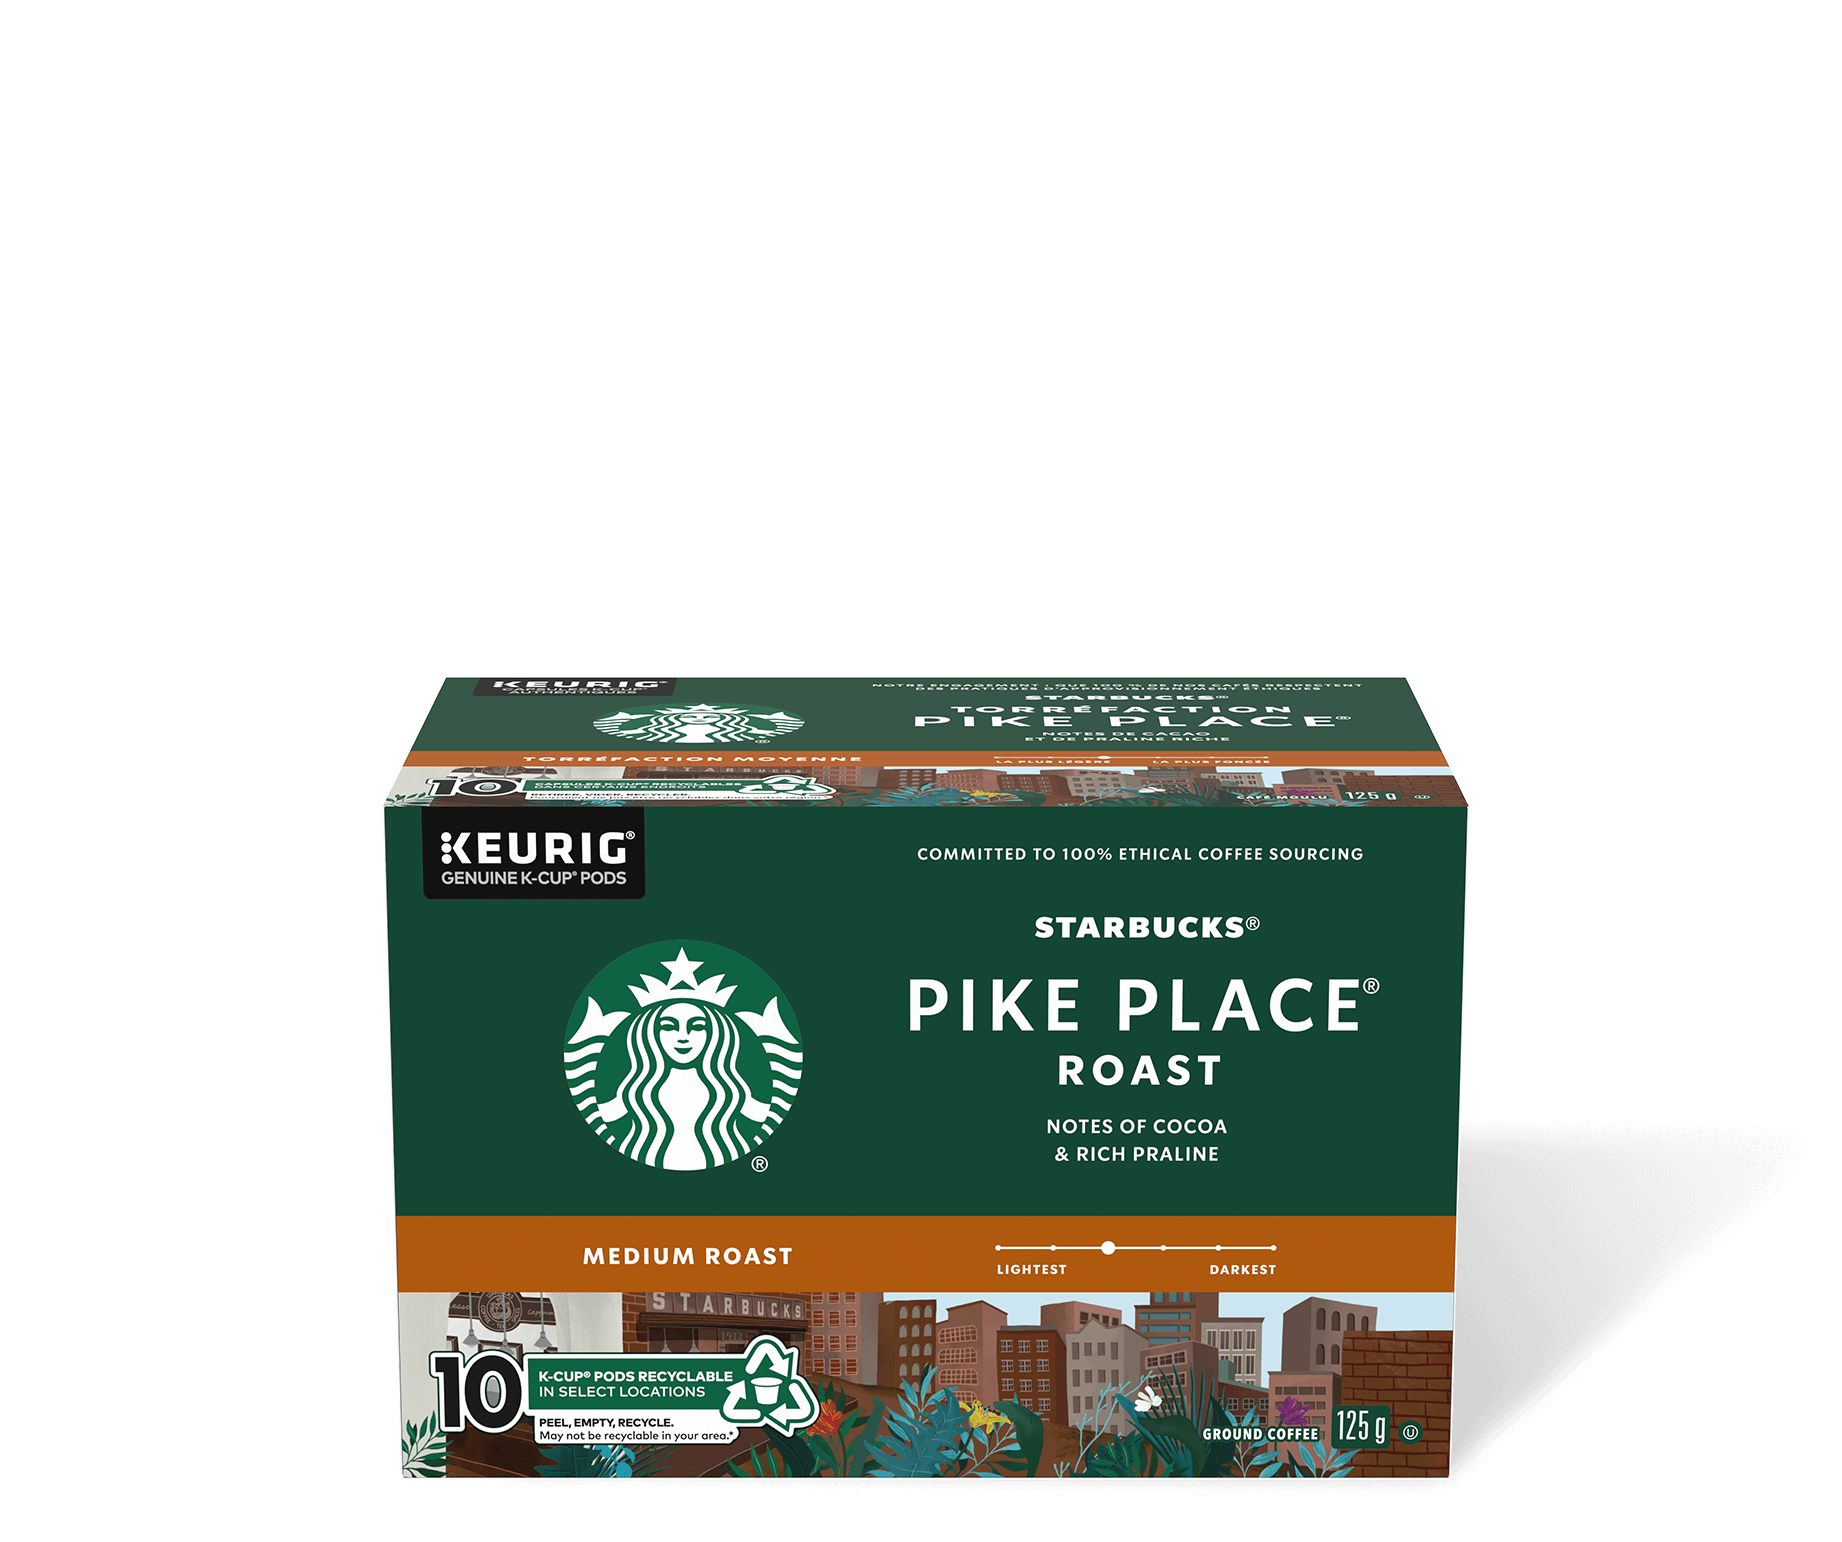 Starbucks K-Cup Coffee Pods—Vanilla Flavored Coffee—Naturally Flavored—100%  Arabica—1 Box (10 Pods), K-Cups & Pods